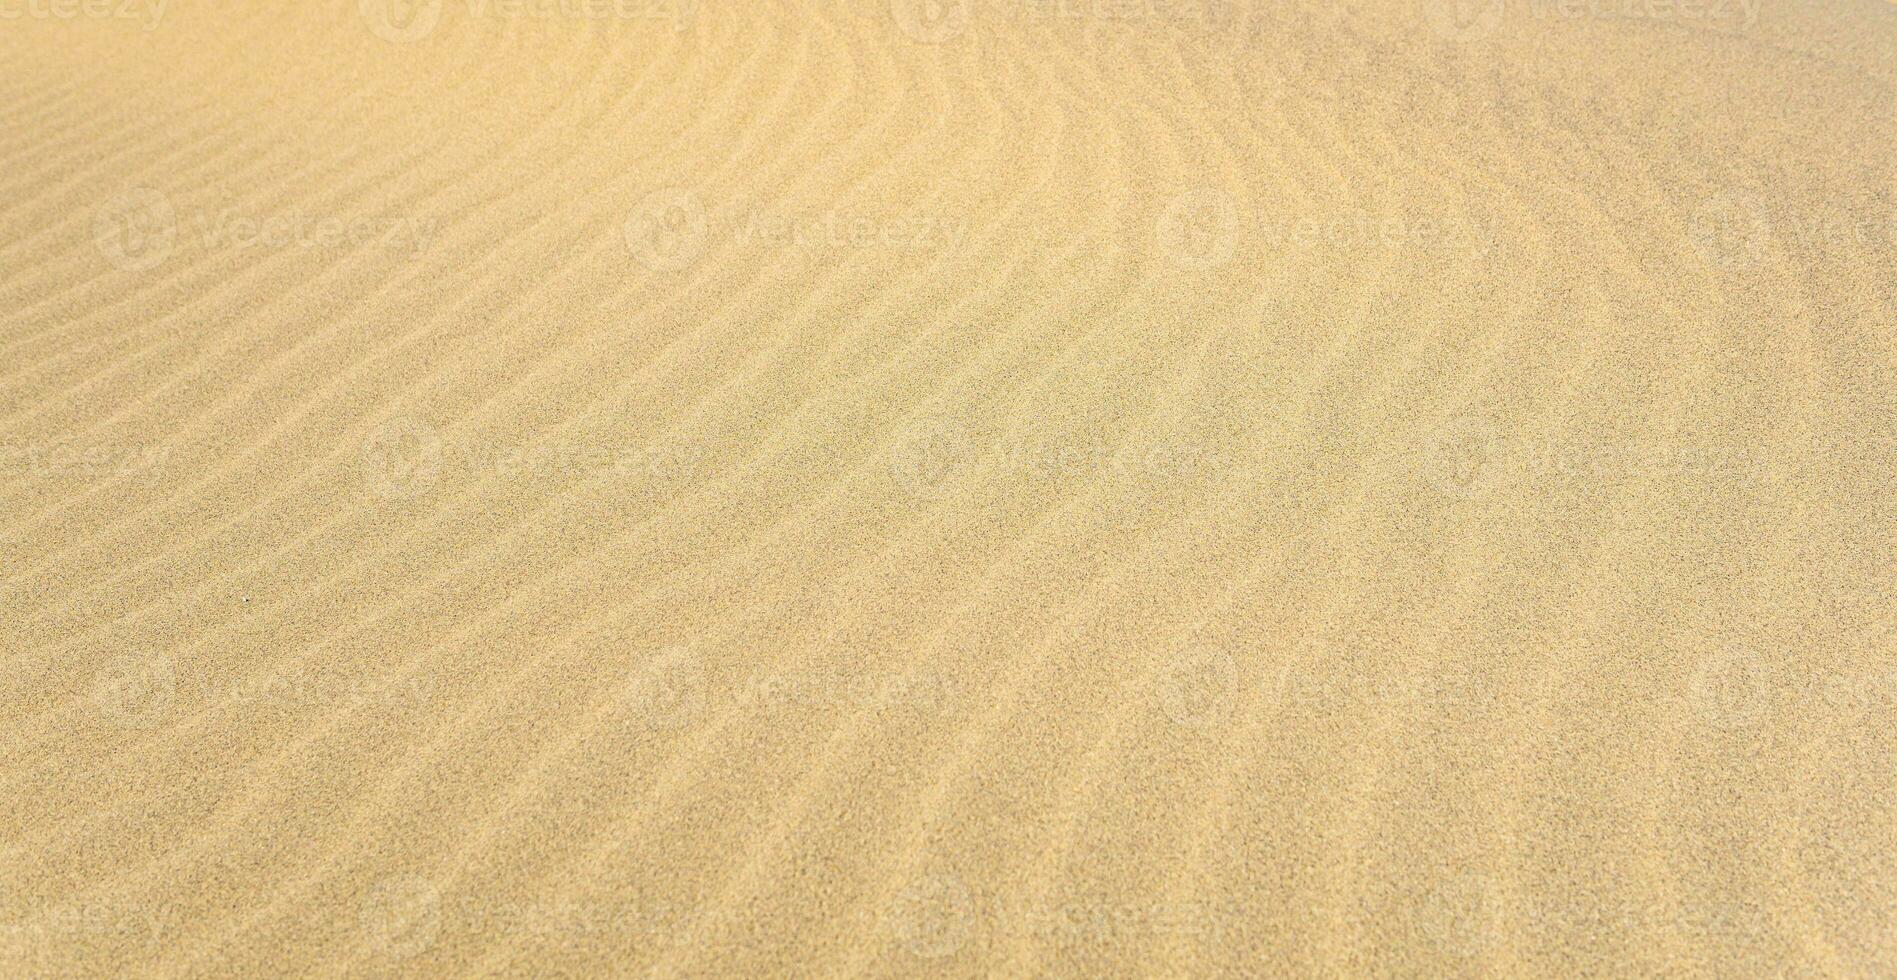 natural fondo, arenoso Desierto superficie con viento ondas foto